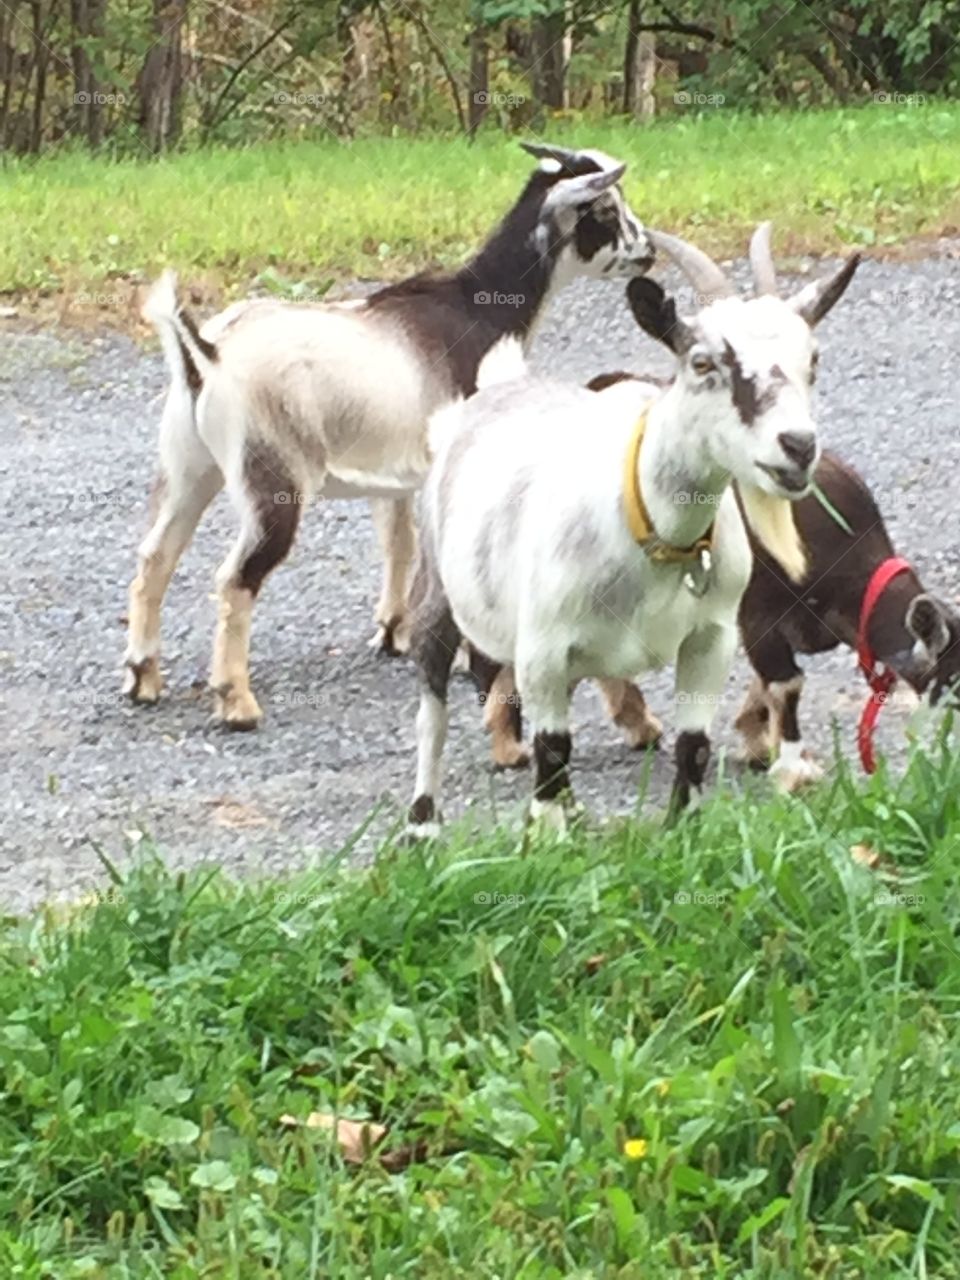 Goats on a walk